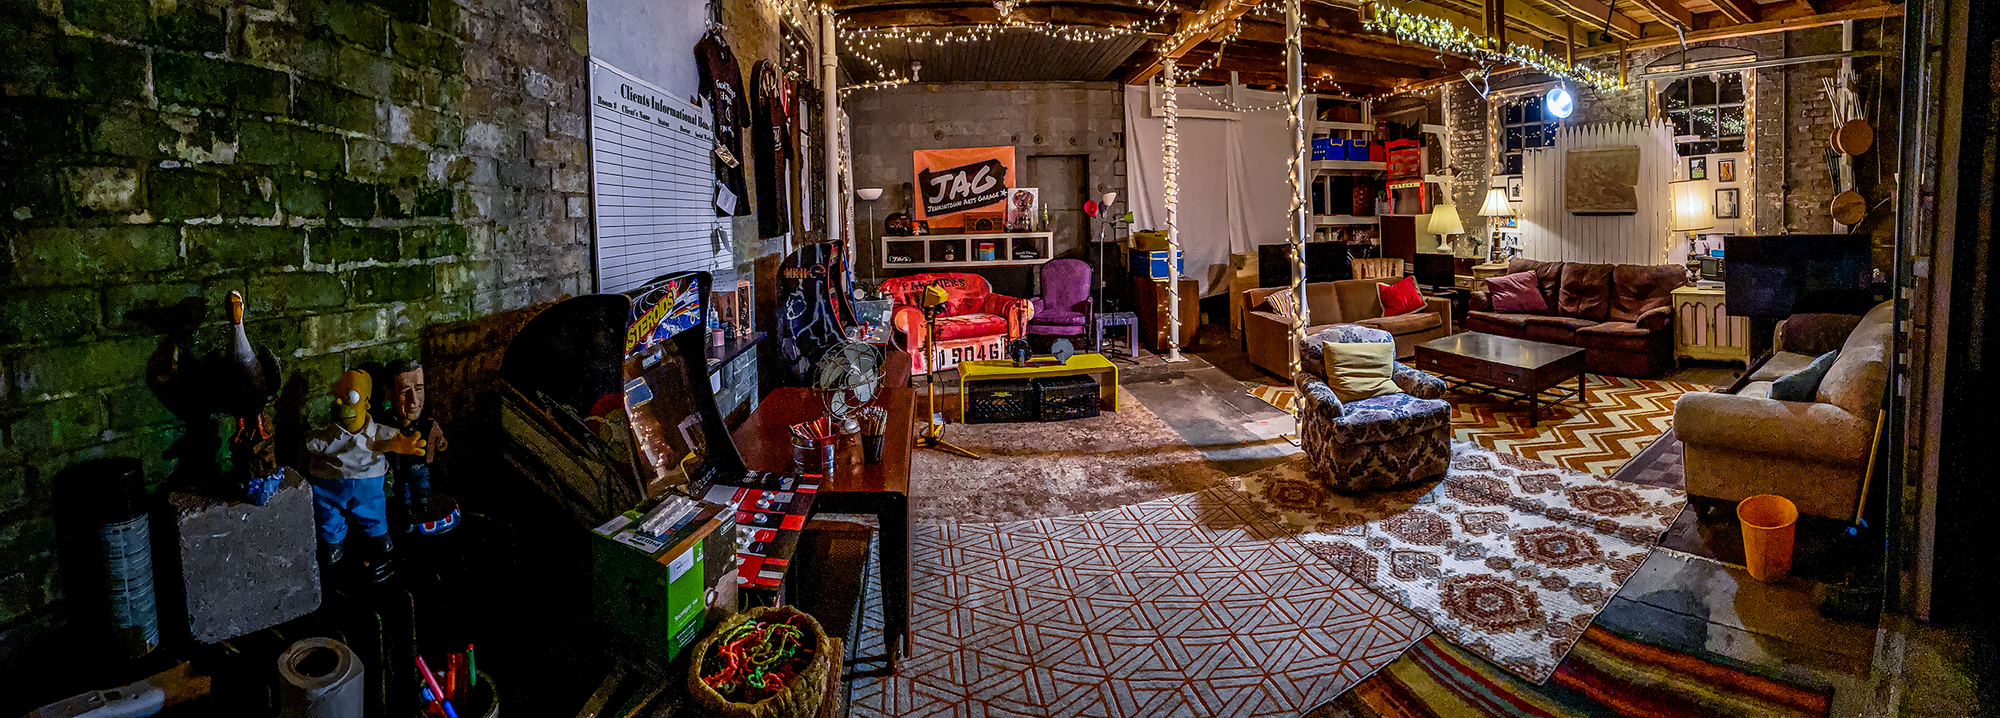 Jenkintown Arts Garage